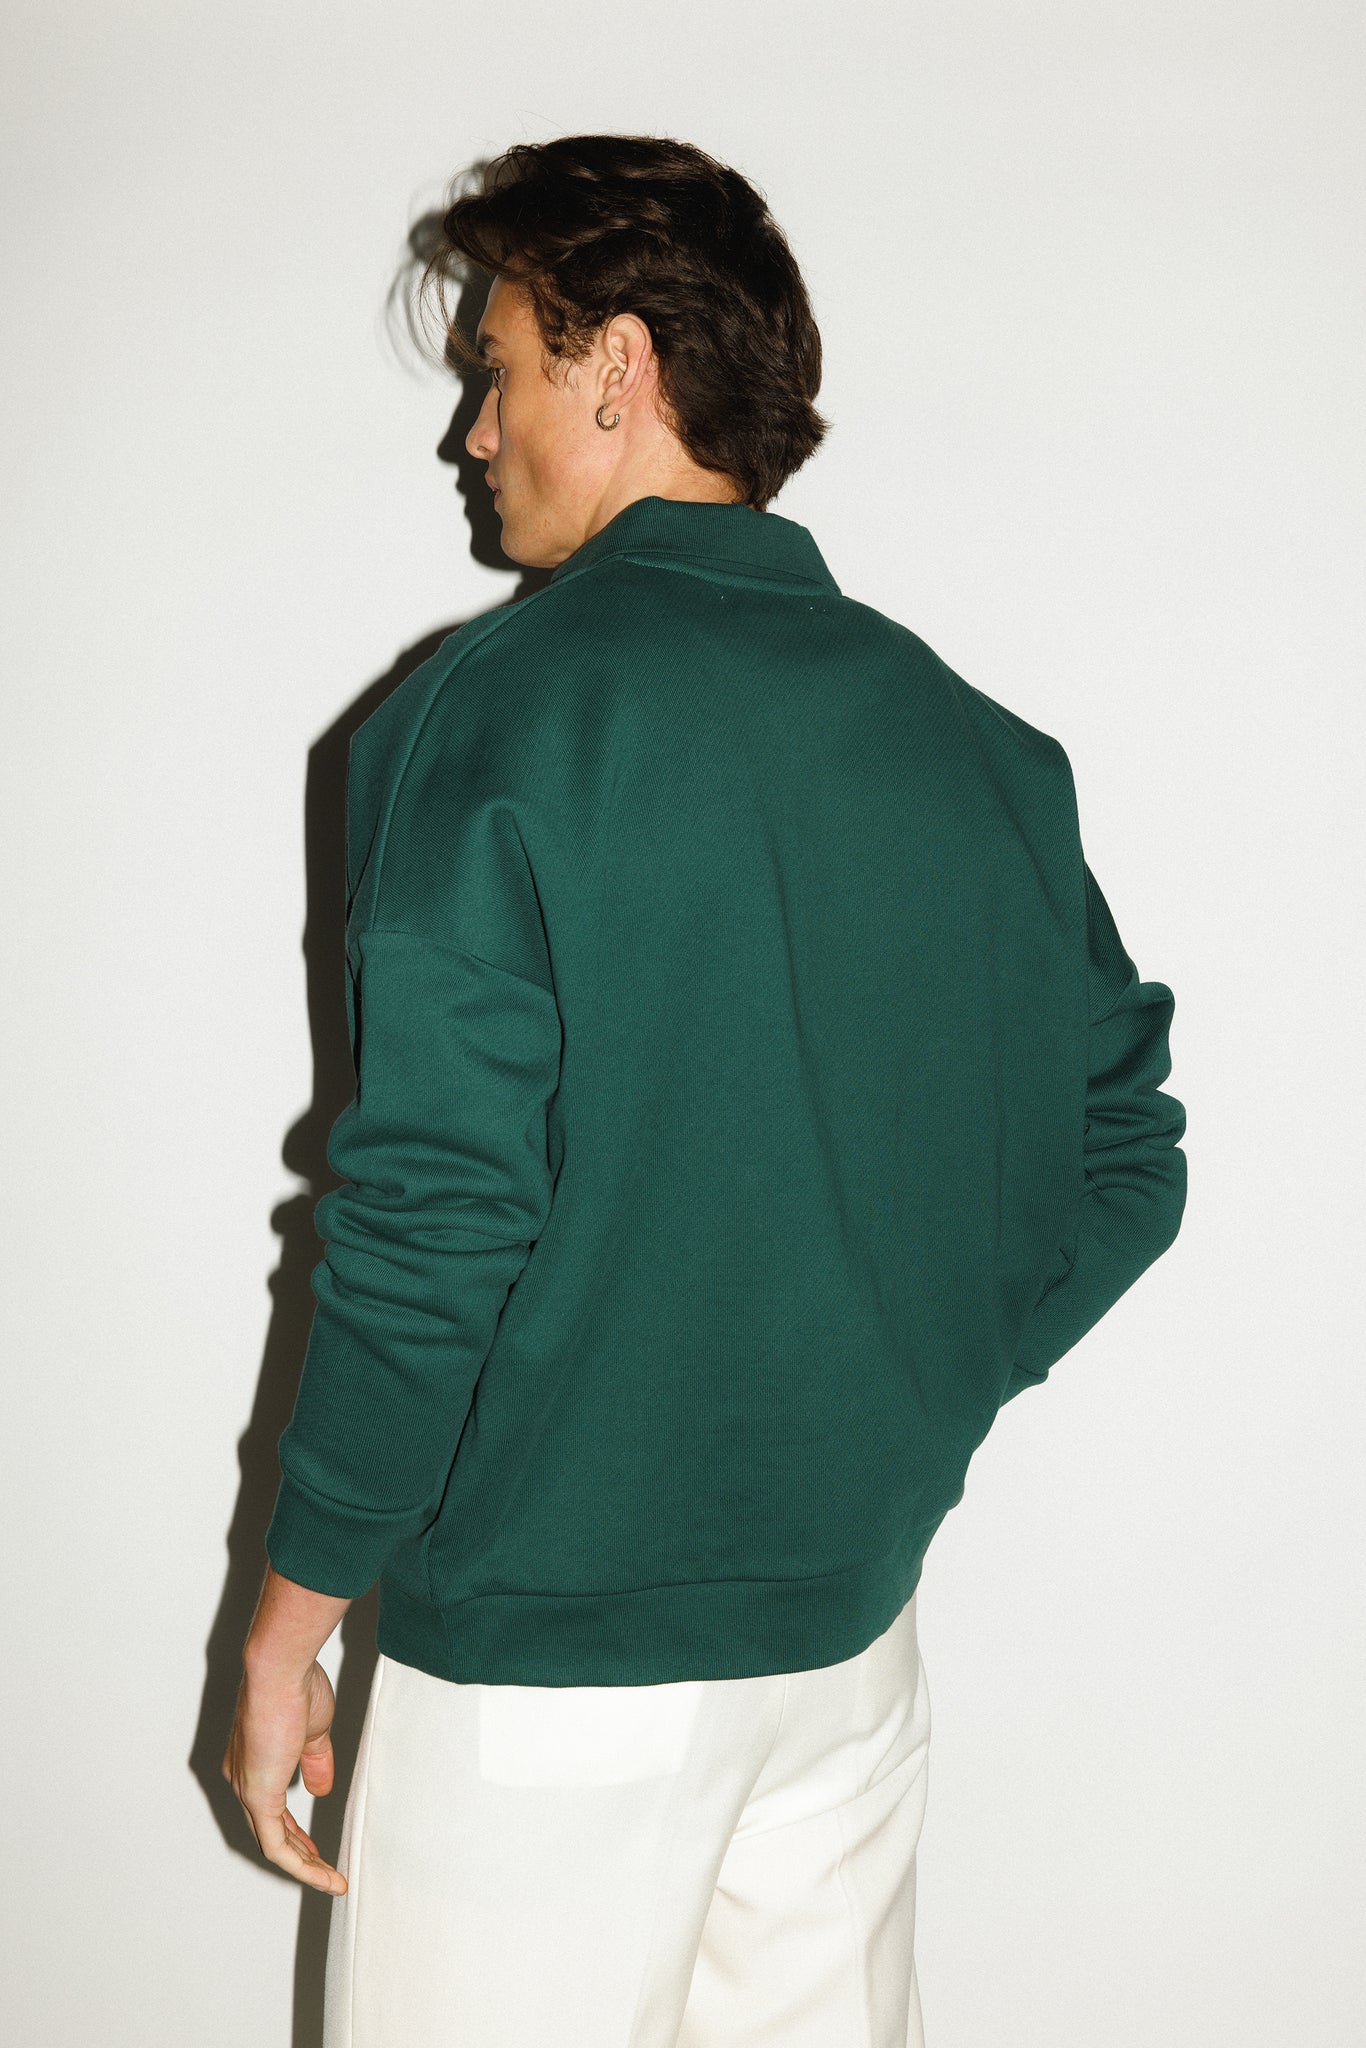 Pacific Oversized Collared Sweatshirt  |  Evergreen